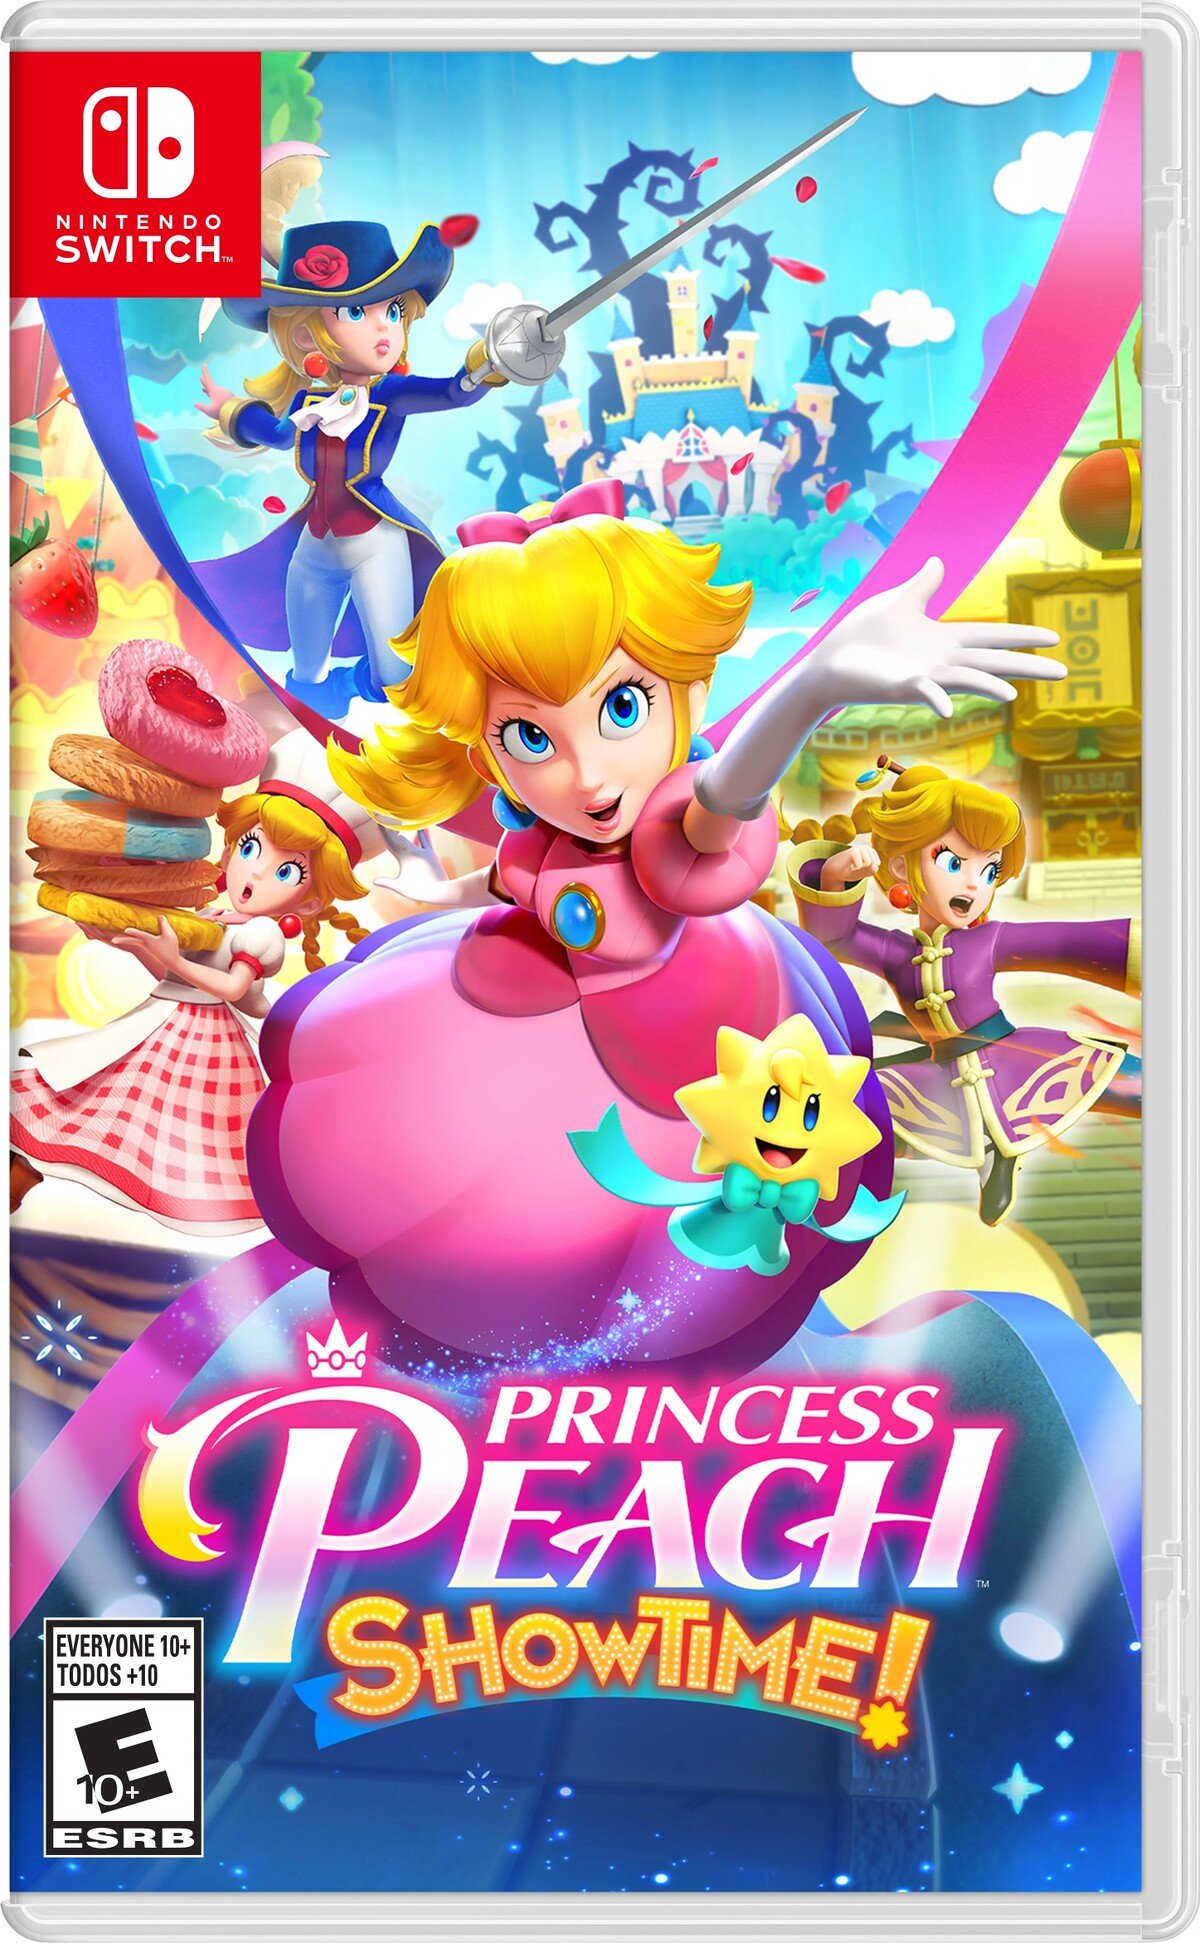 Evolution of Princess Peach in Super Mario Sports Games (1999 - 2017) 